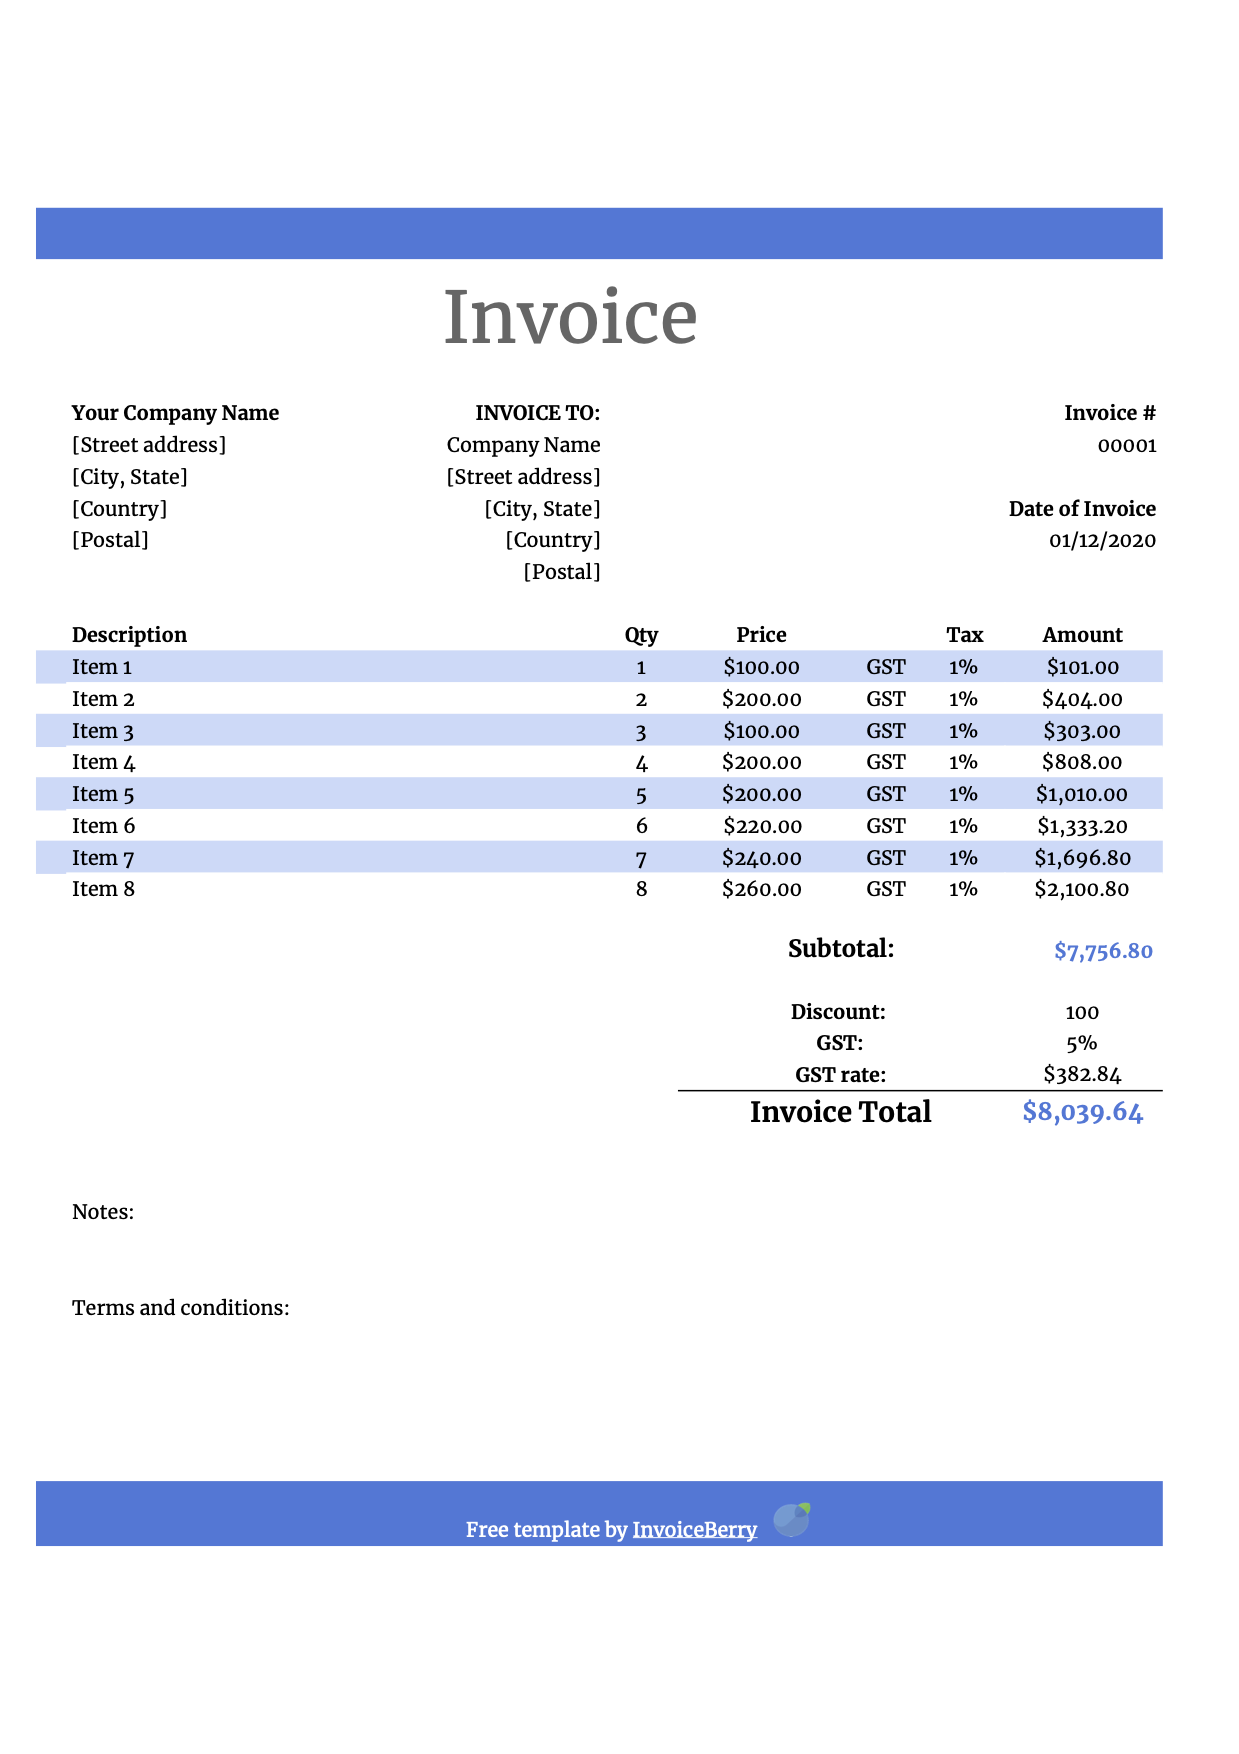 Free Google Drive Invoice Templates: Blank Docs & Sheets Invoices In Invoice Template Uk Doc